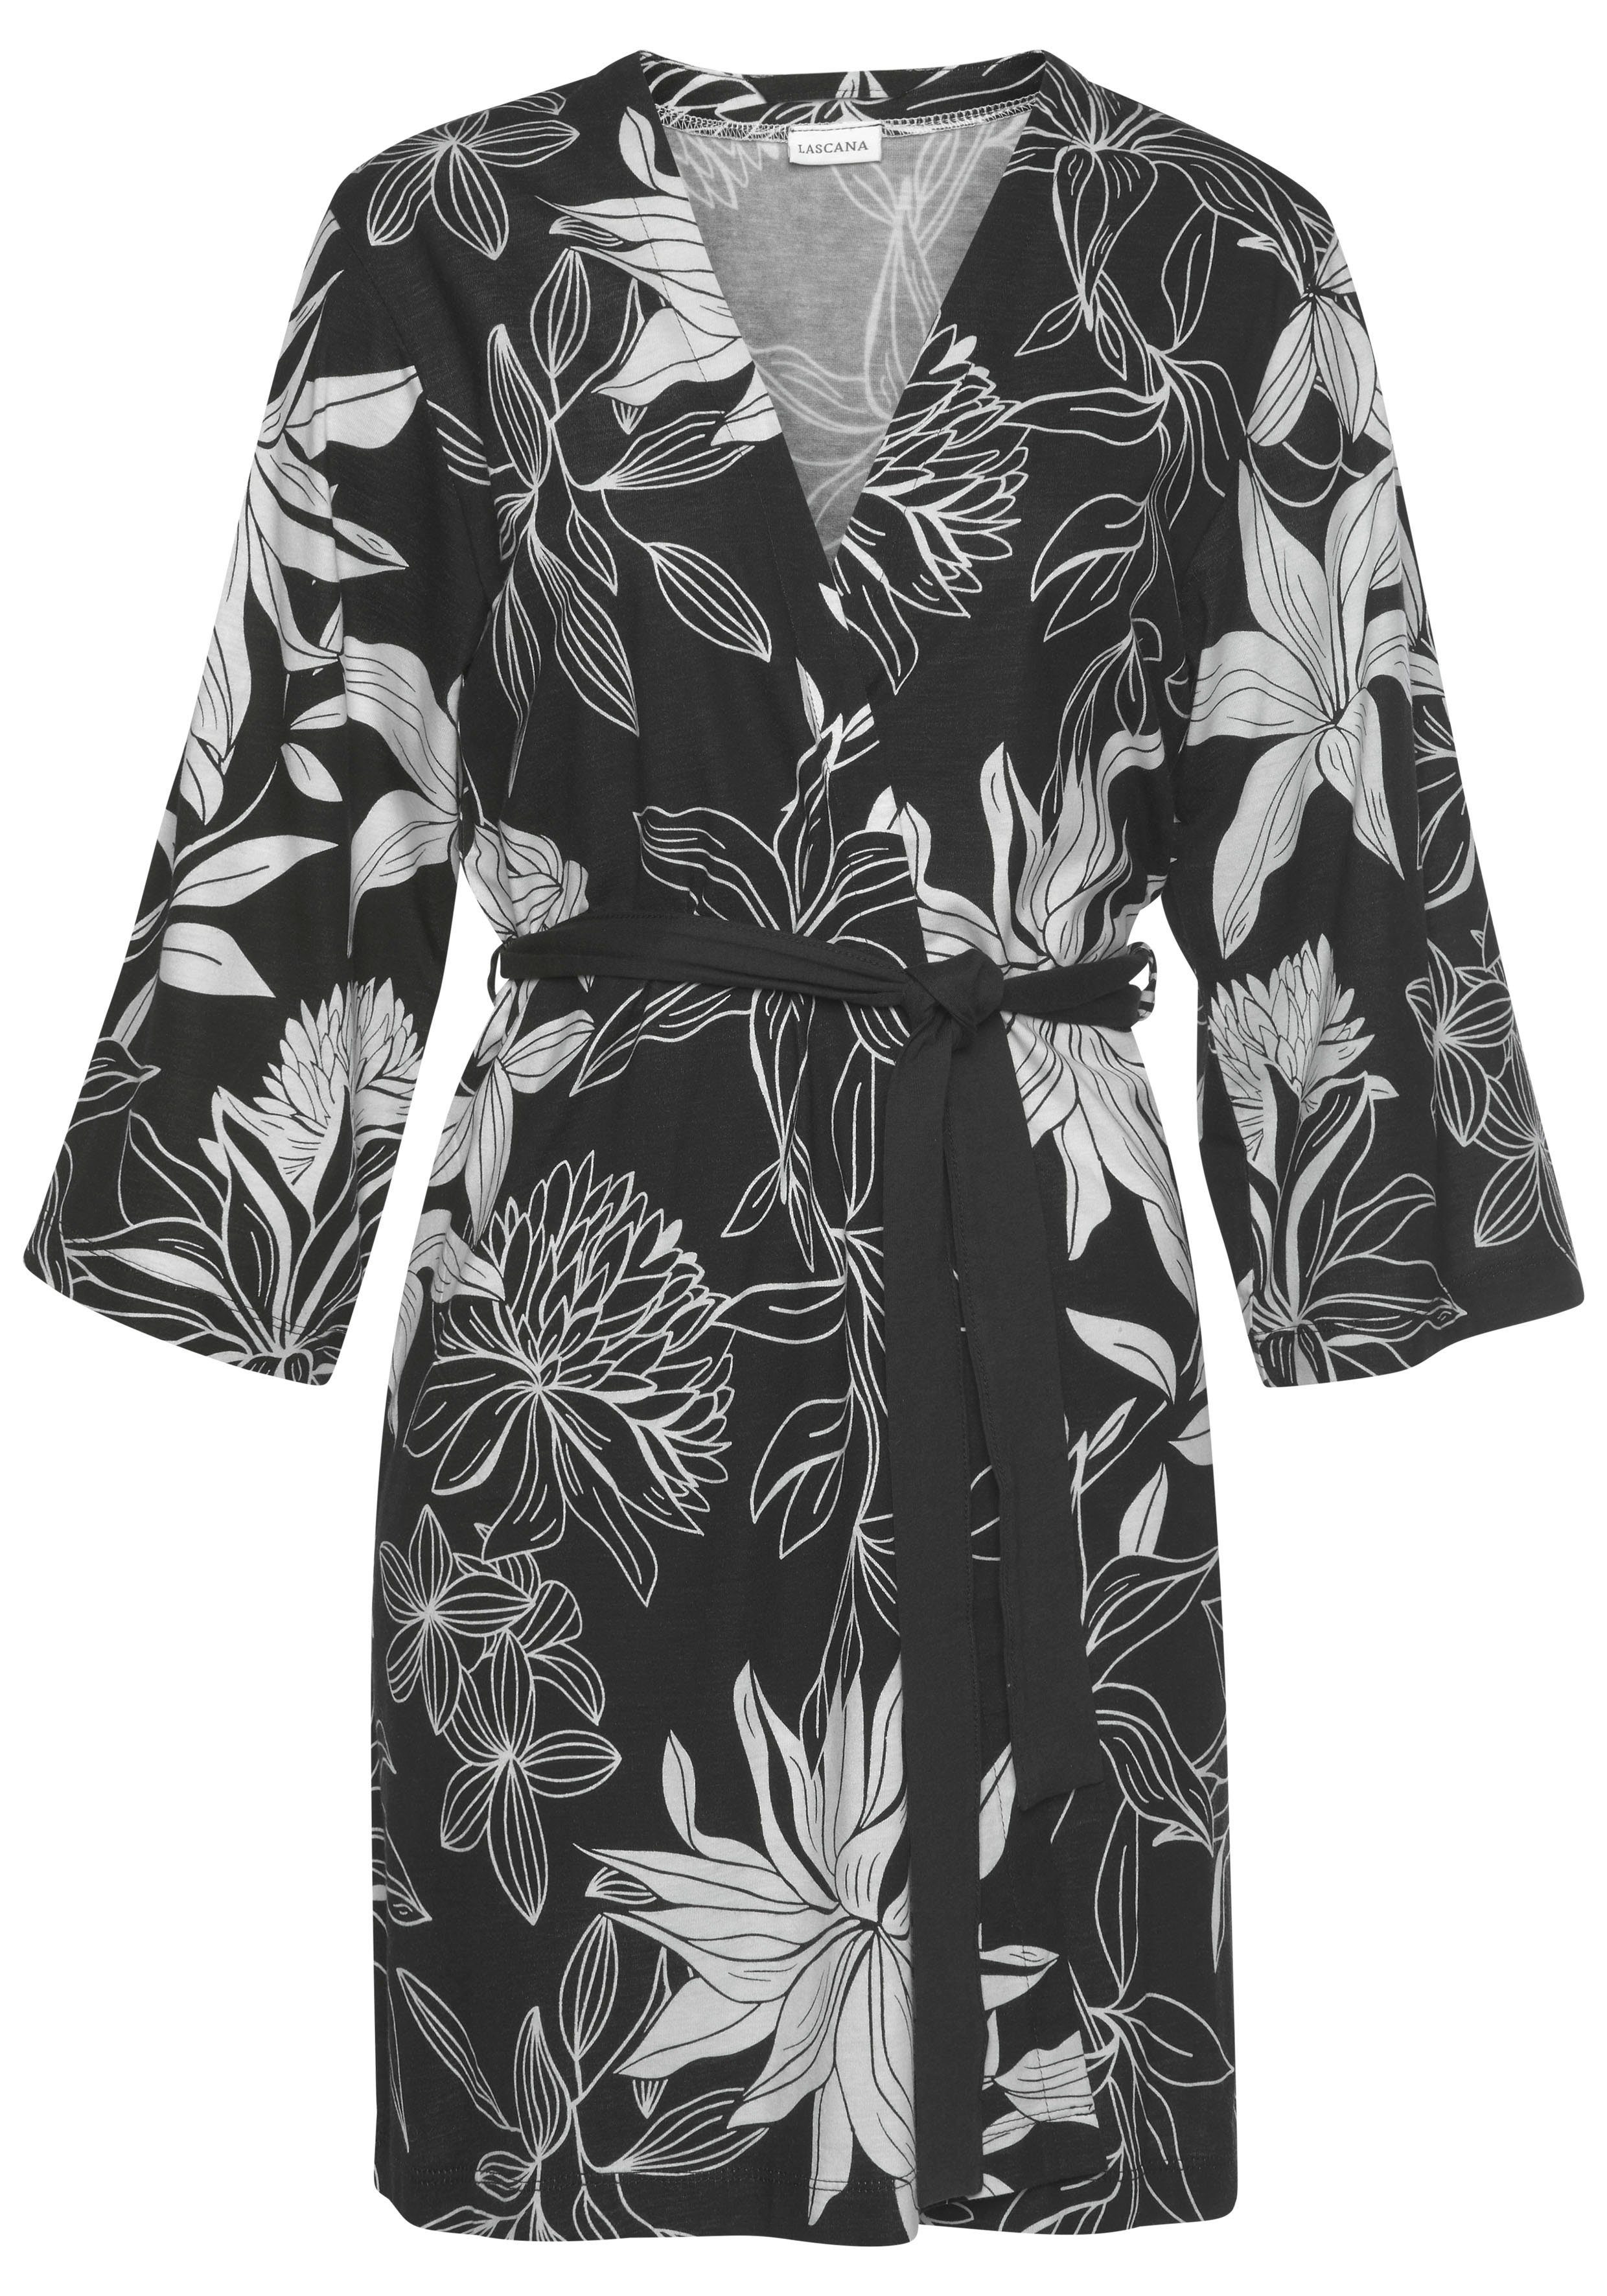 mit Single-Jersey, floralem Kurzform, schwarz Kimono-Kragen, Gürtel, LASCANA Kimono, Druck